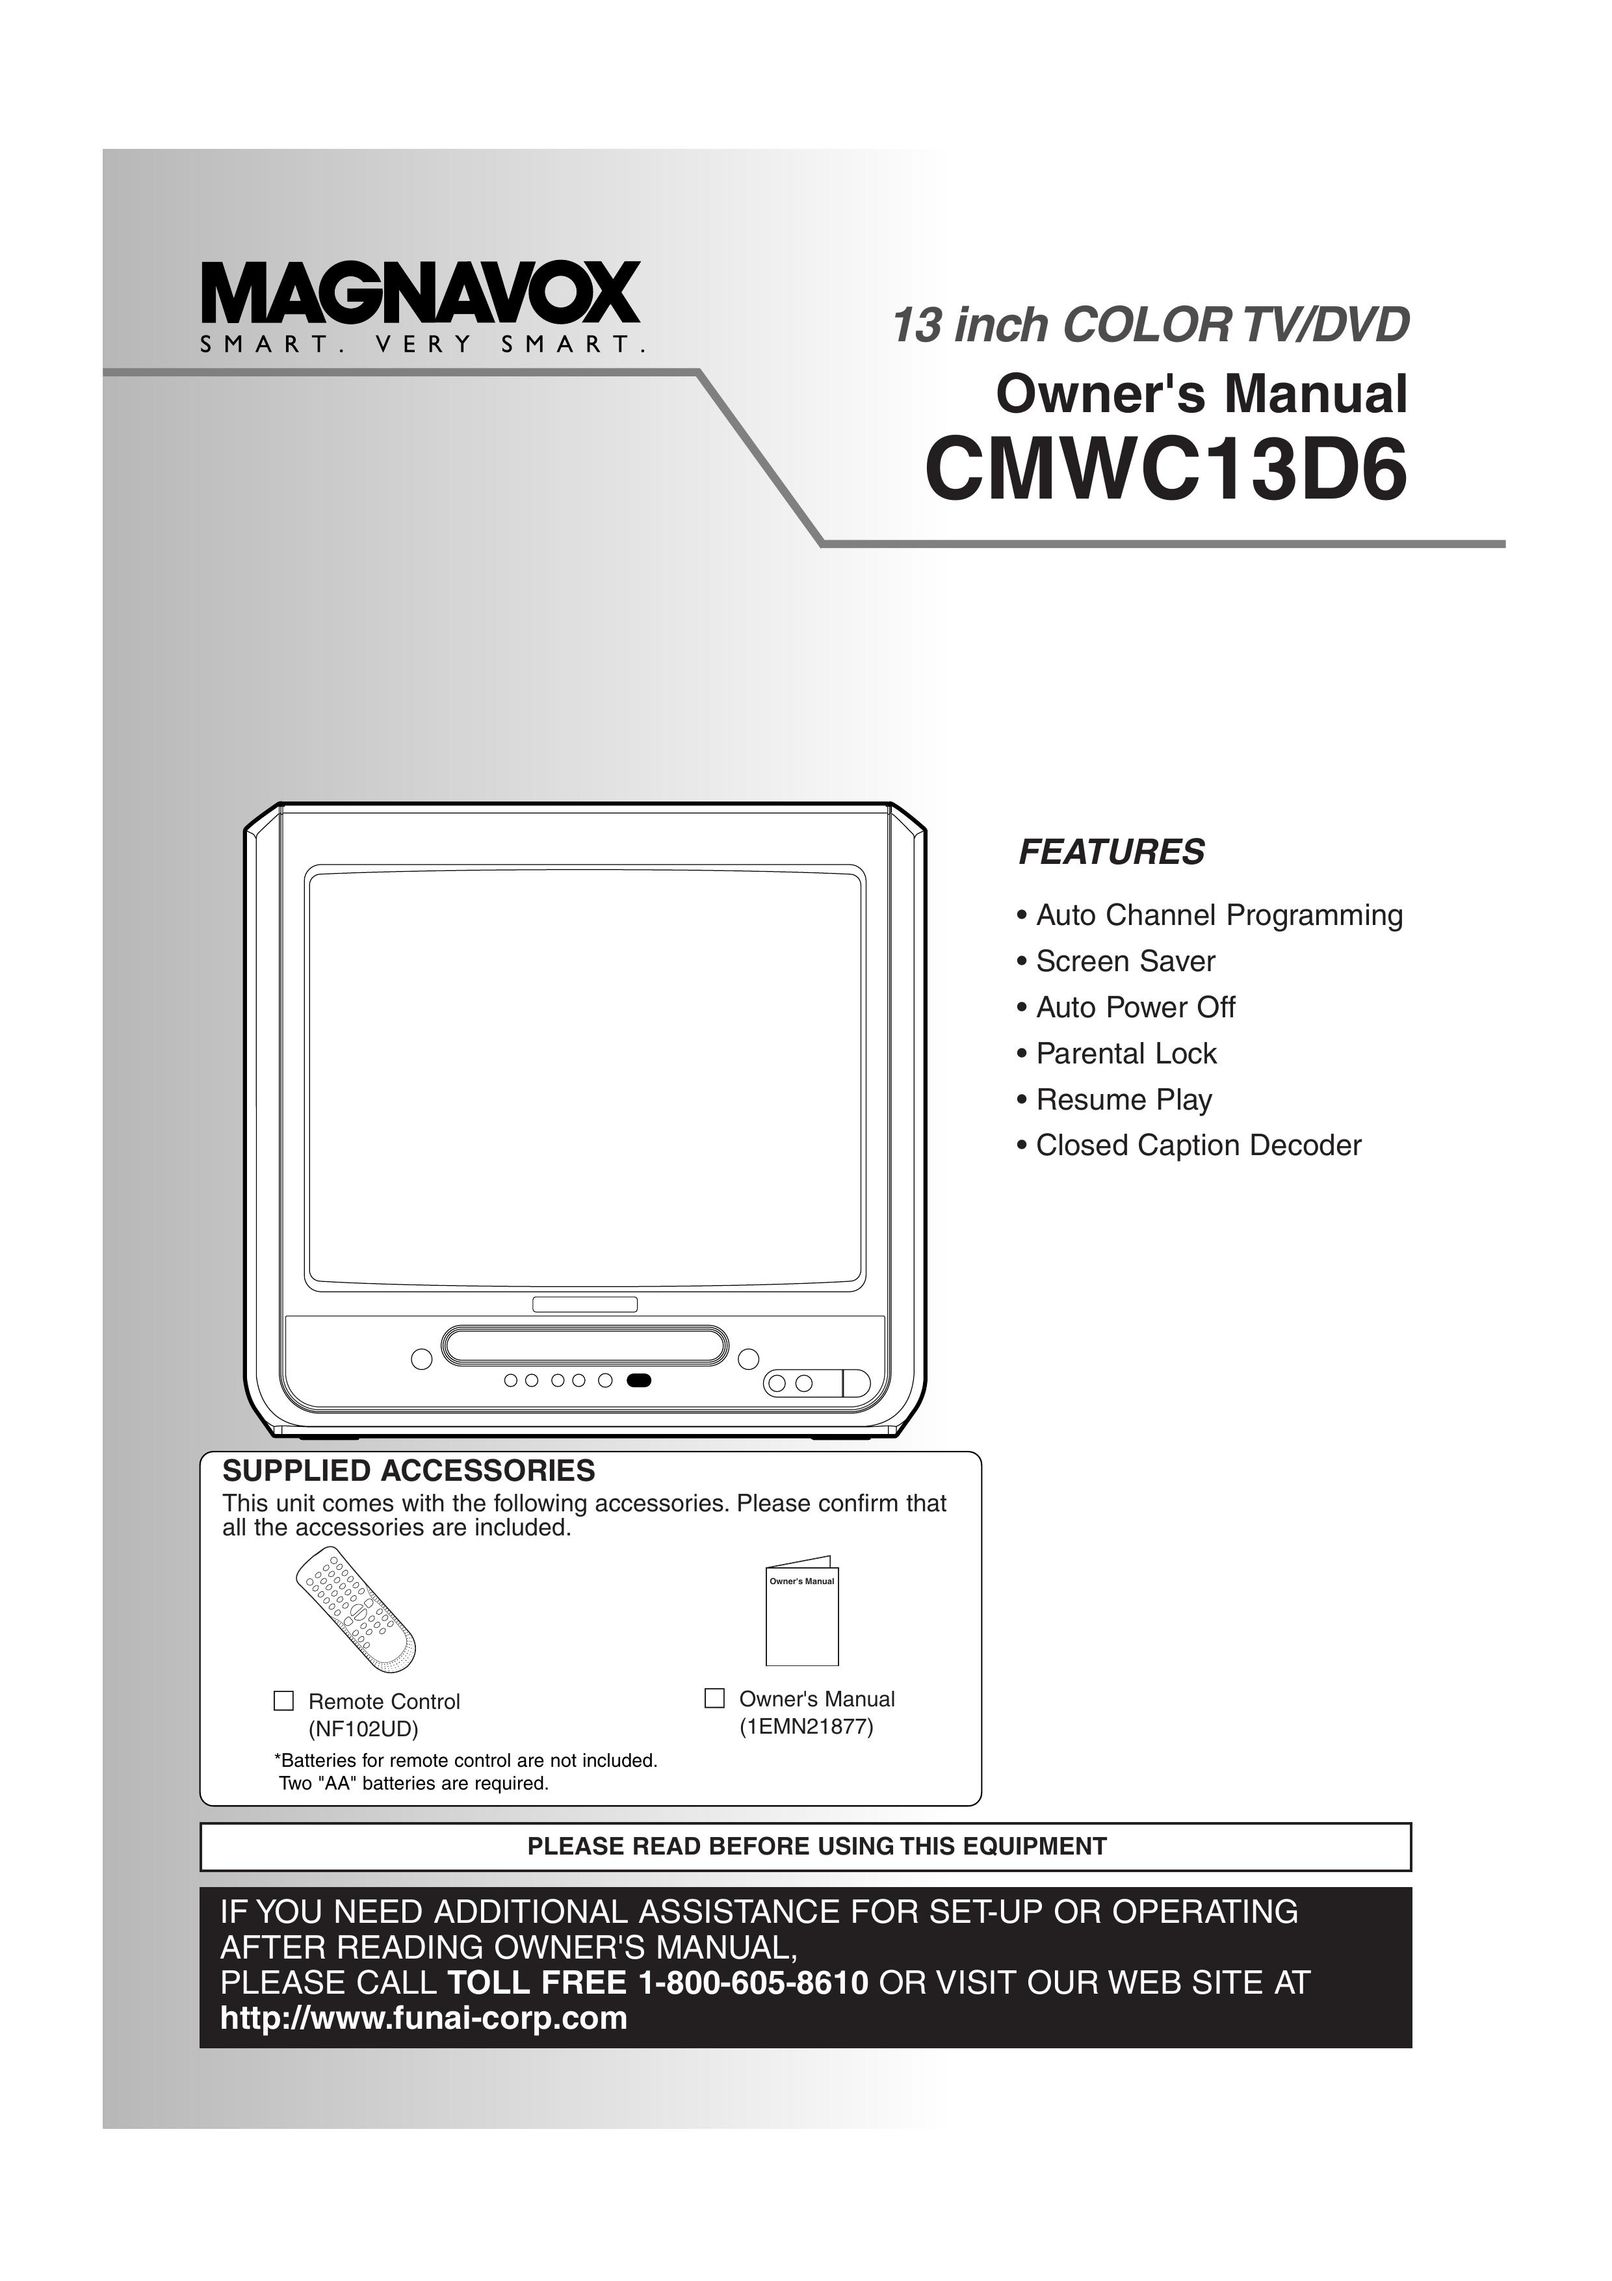 FUNAI CMWC13D6 TV DVD Combo User Manual